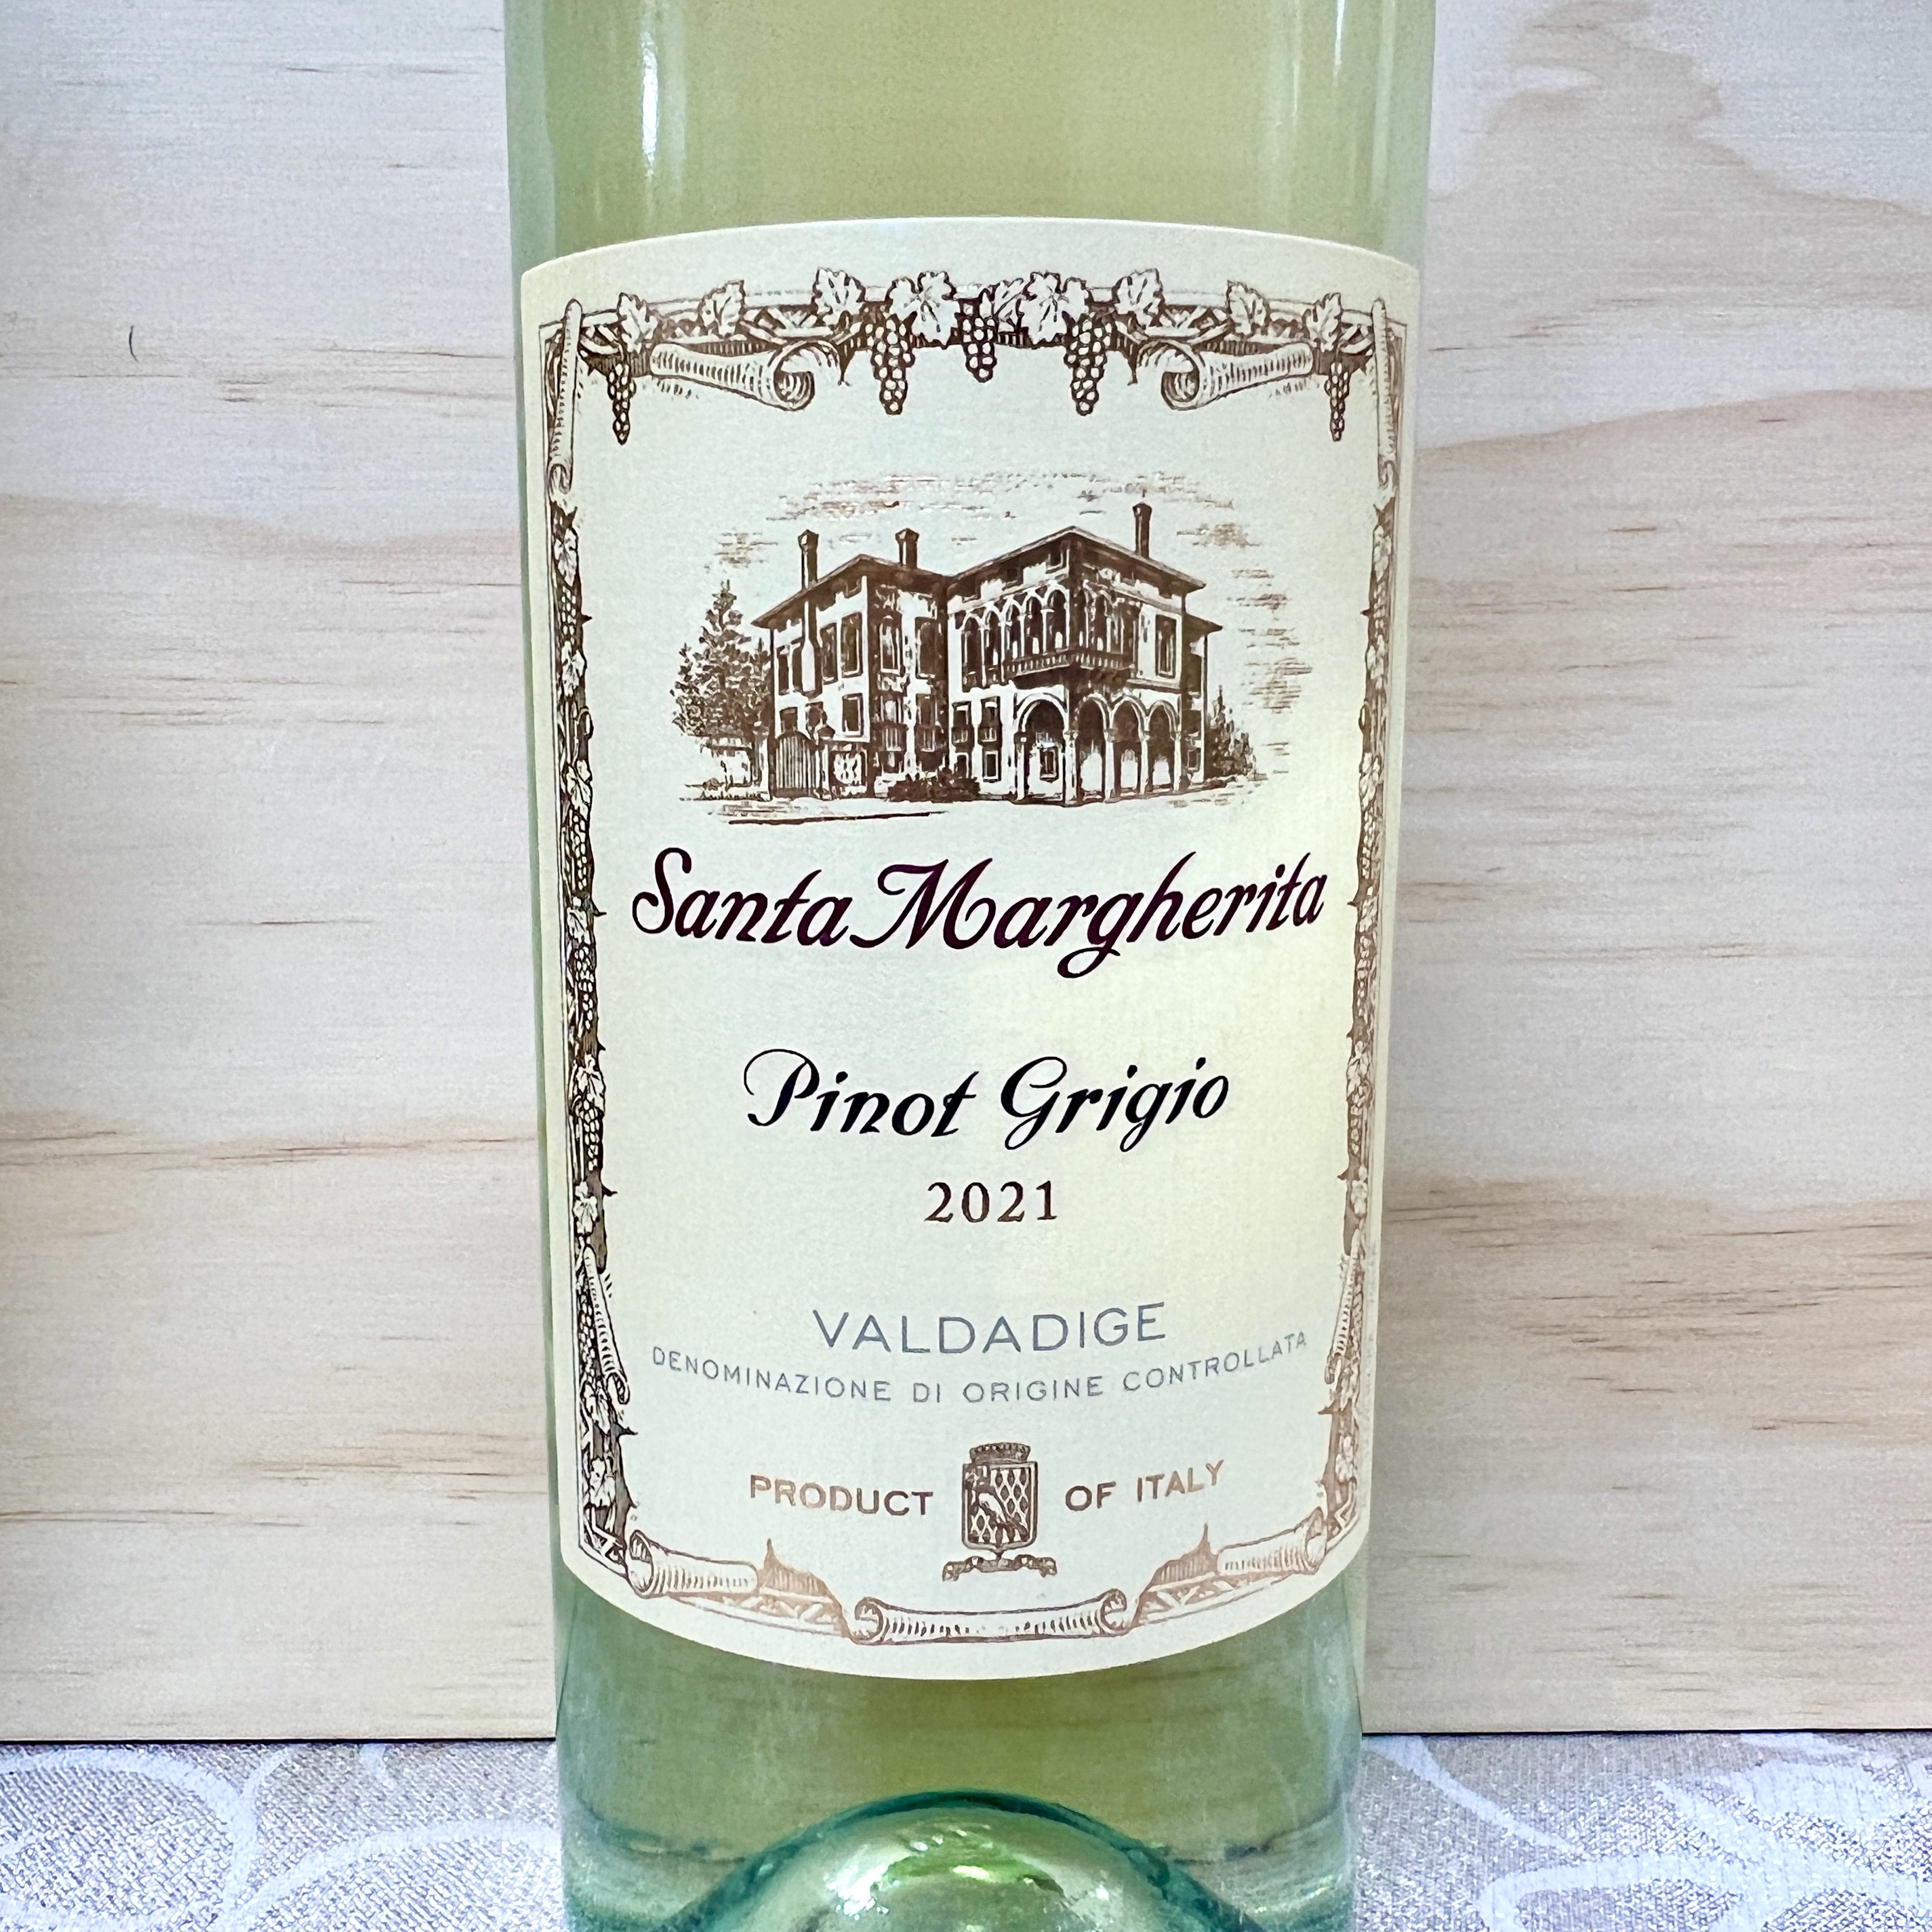 Santa Margherita Valdadige Pinot Grigio 2021